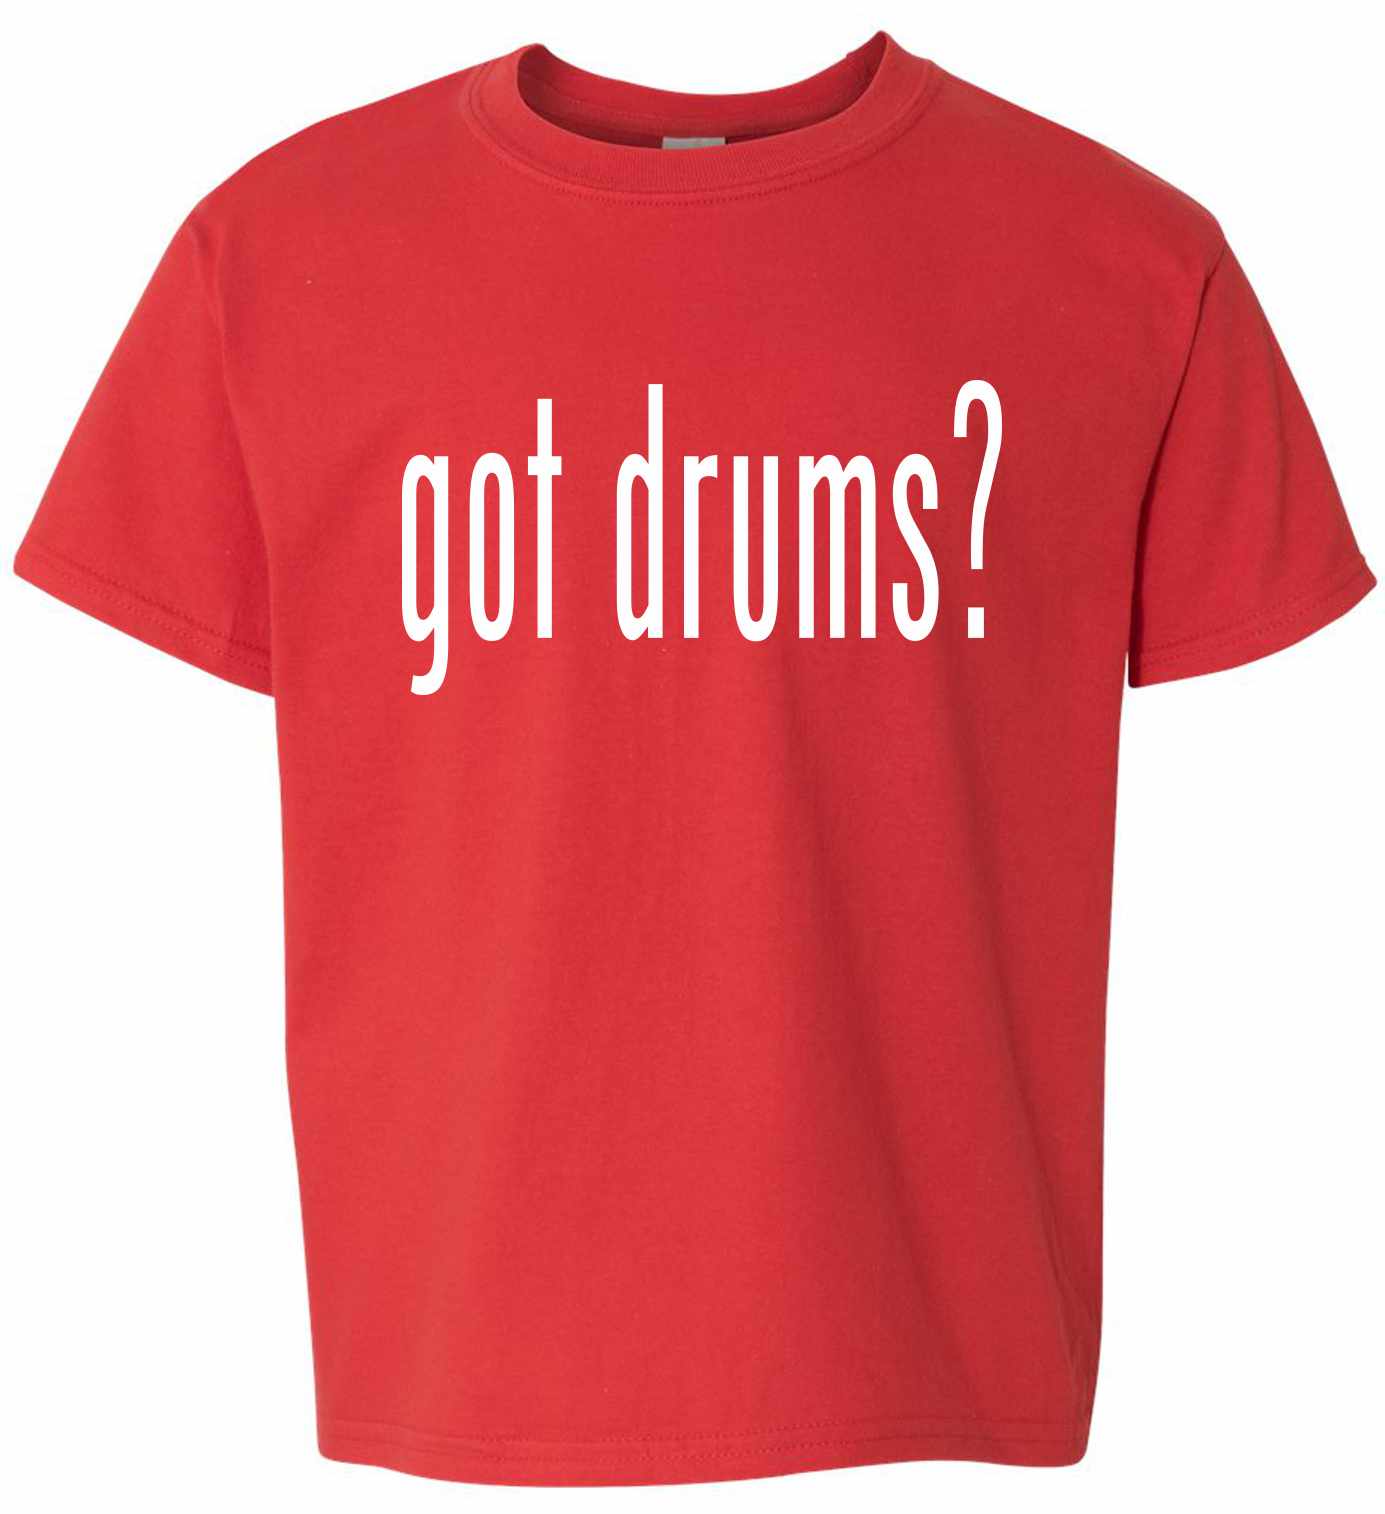 Got Drums? on Kids T-Shirt (#889-201)